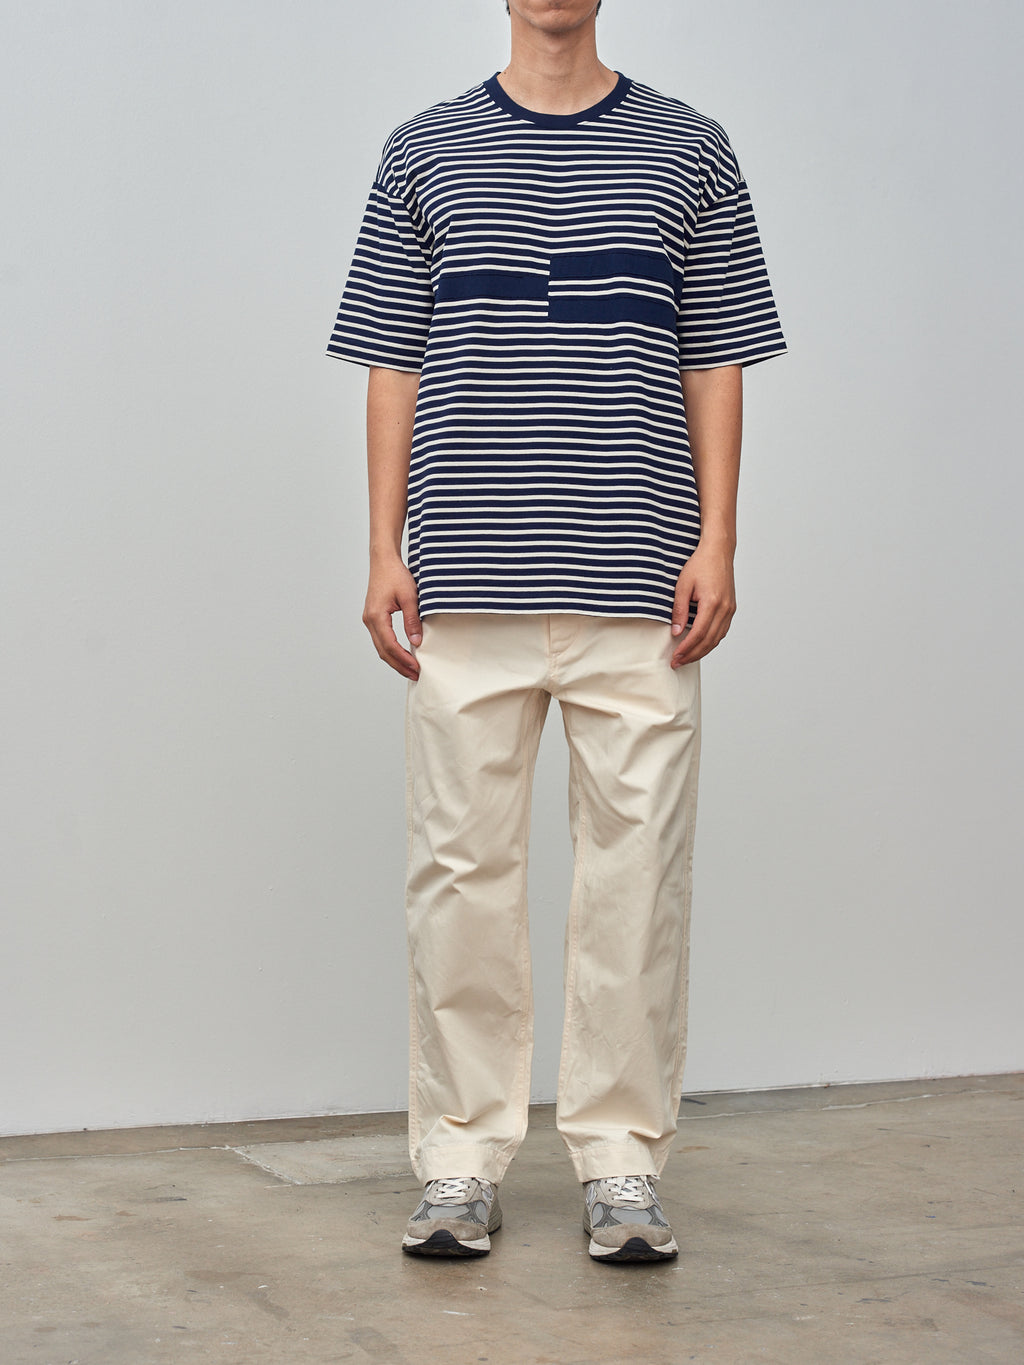 Namu Shop - ts(s) Horizontal Stripe Line T-Shirt - Navy